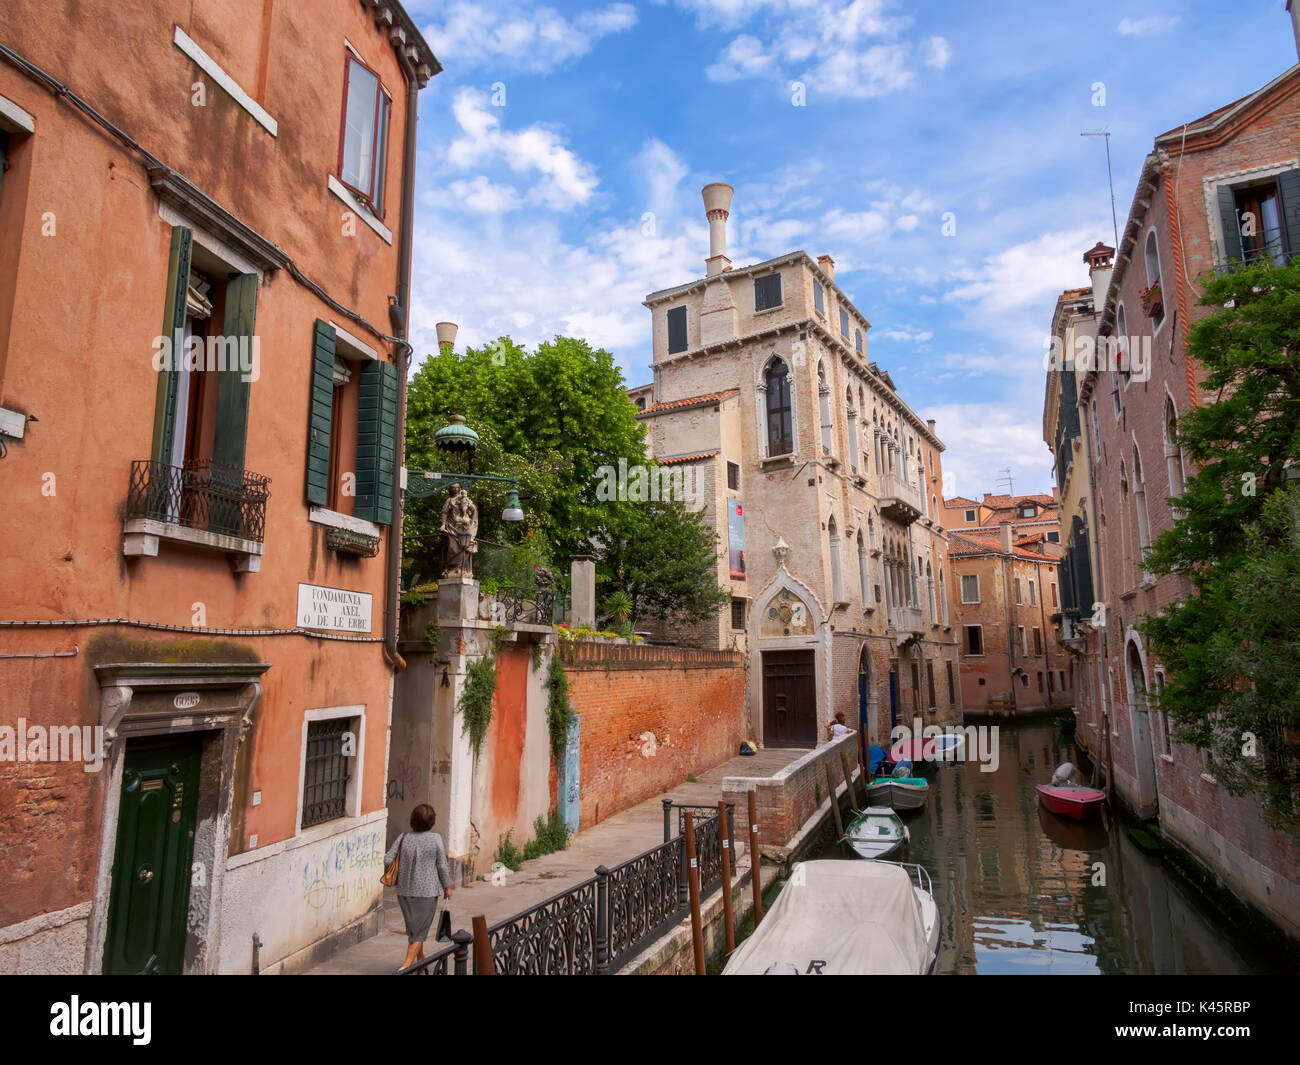 Canal and palace in Cannaregio, Venice, Italy Stock Photo